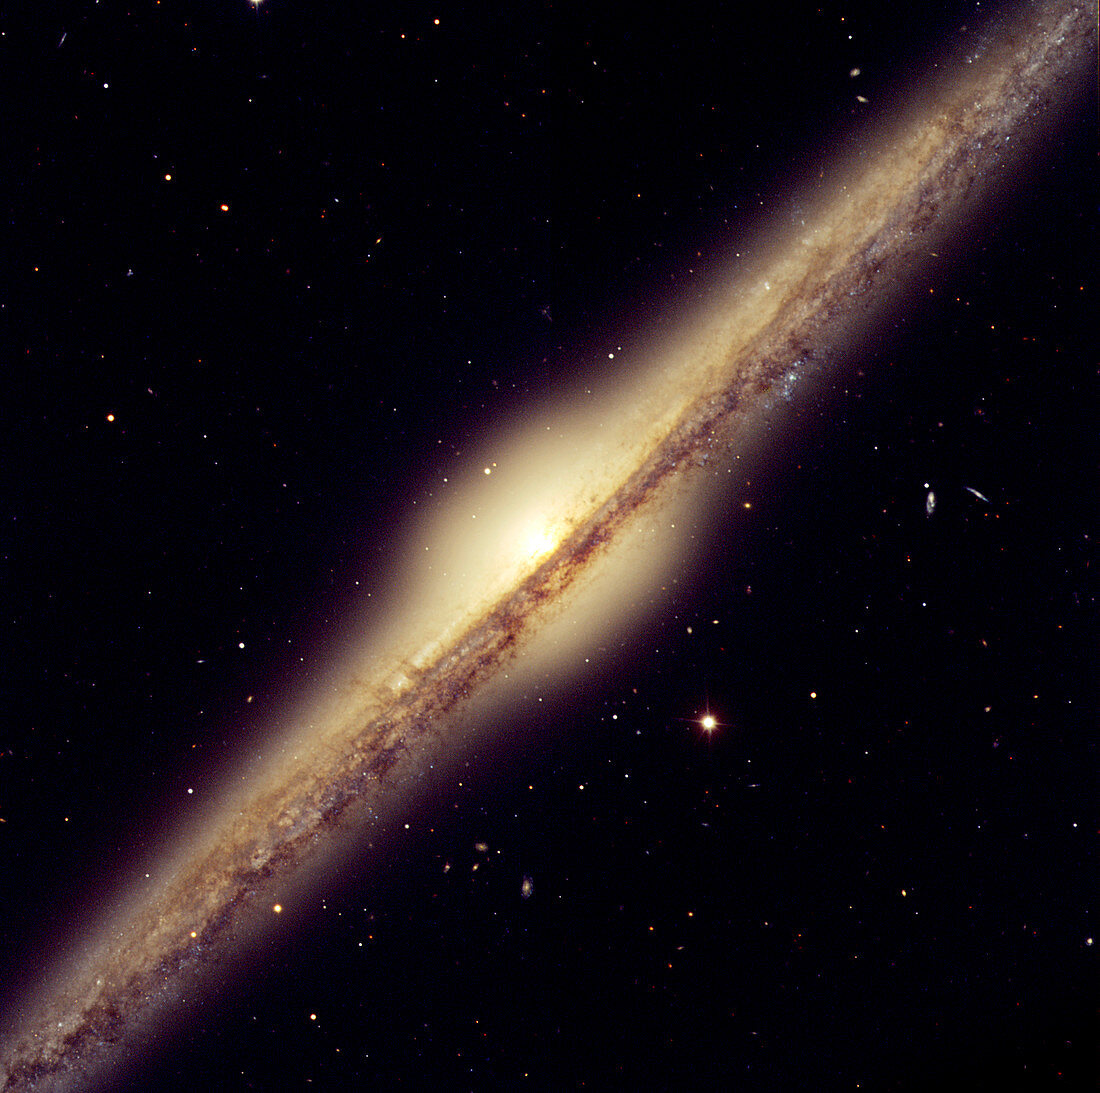 Edge-on spiral galaxy NGC 4565